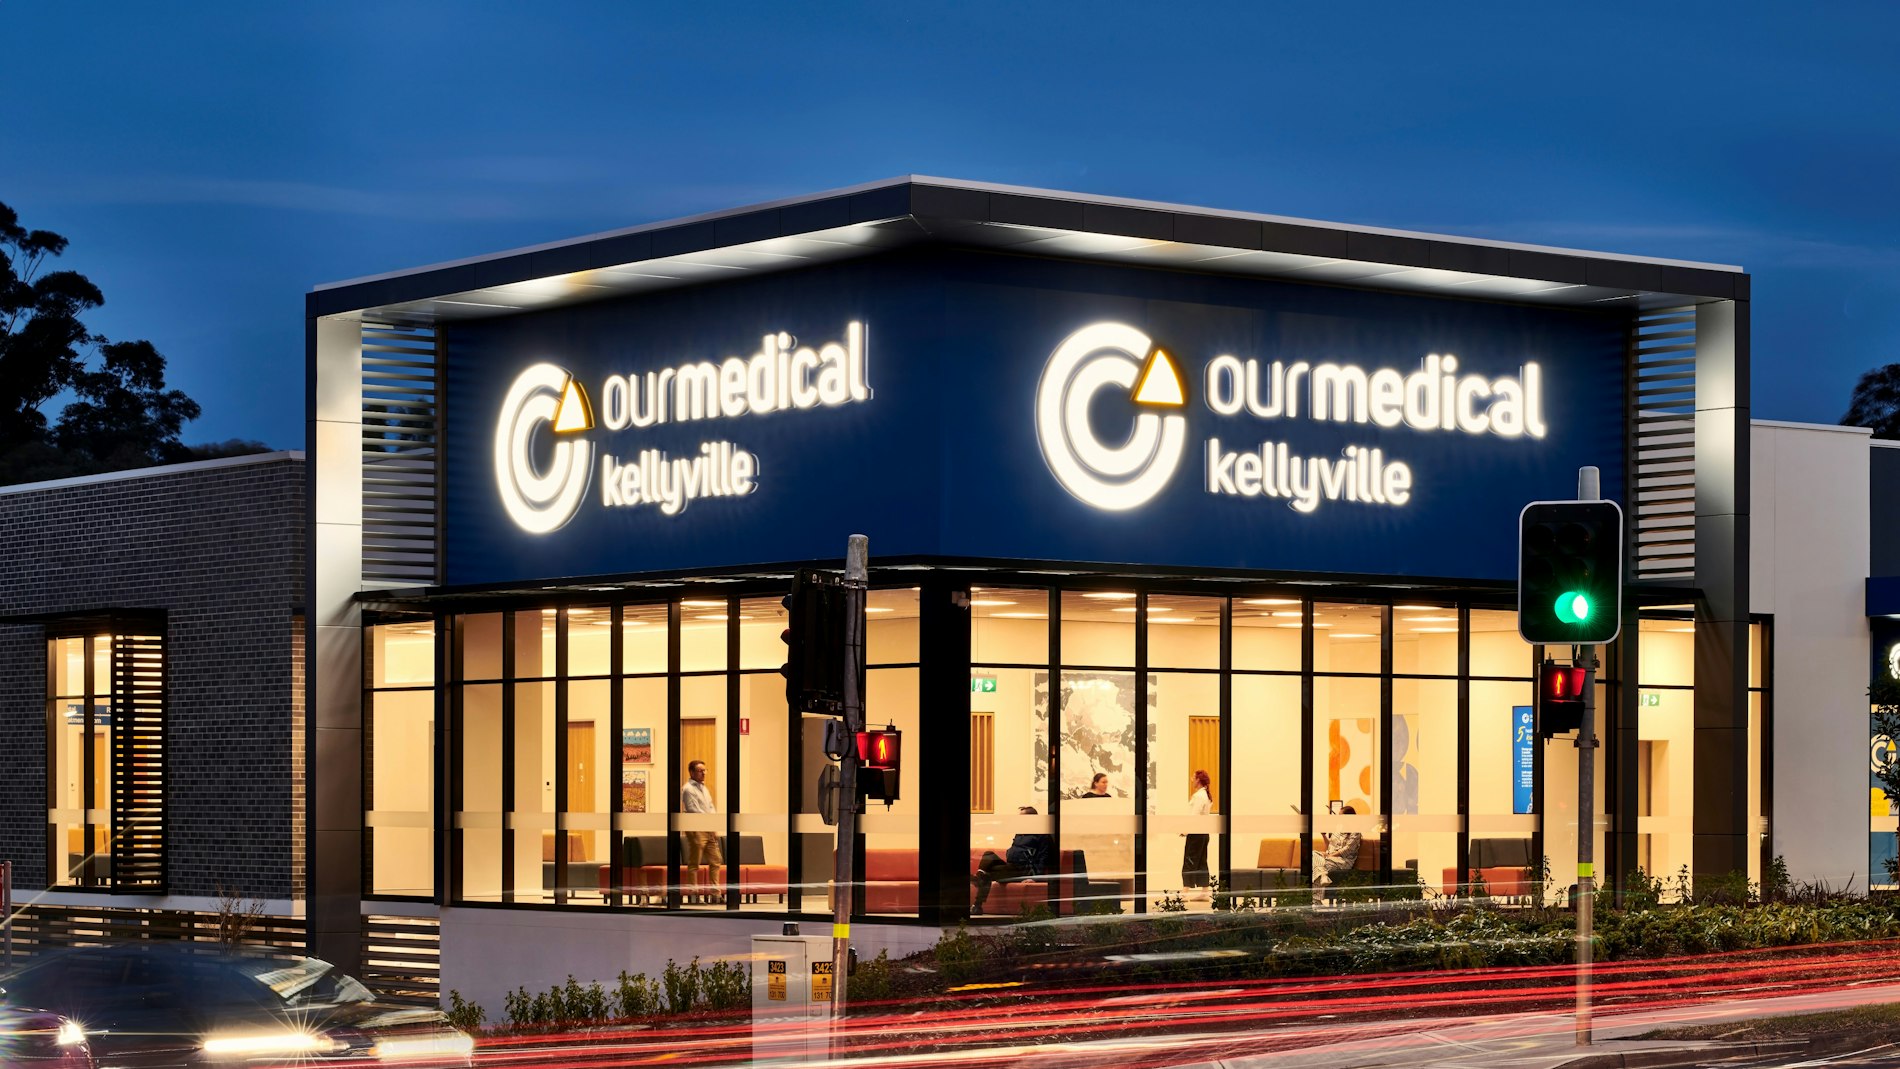 Our Medical Kellyville